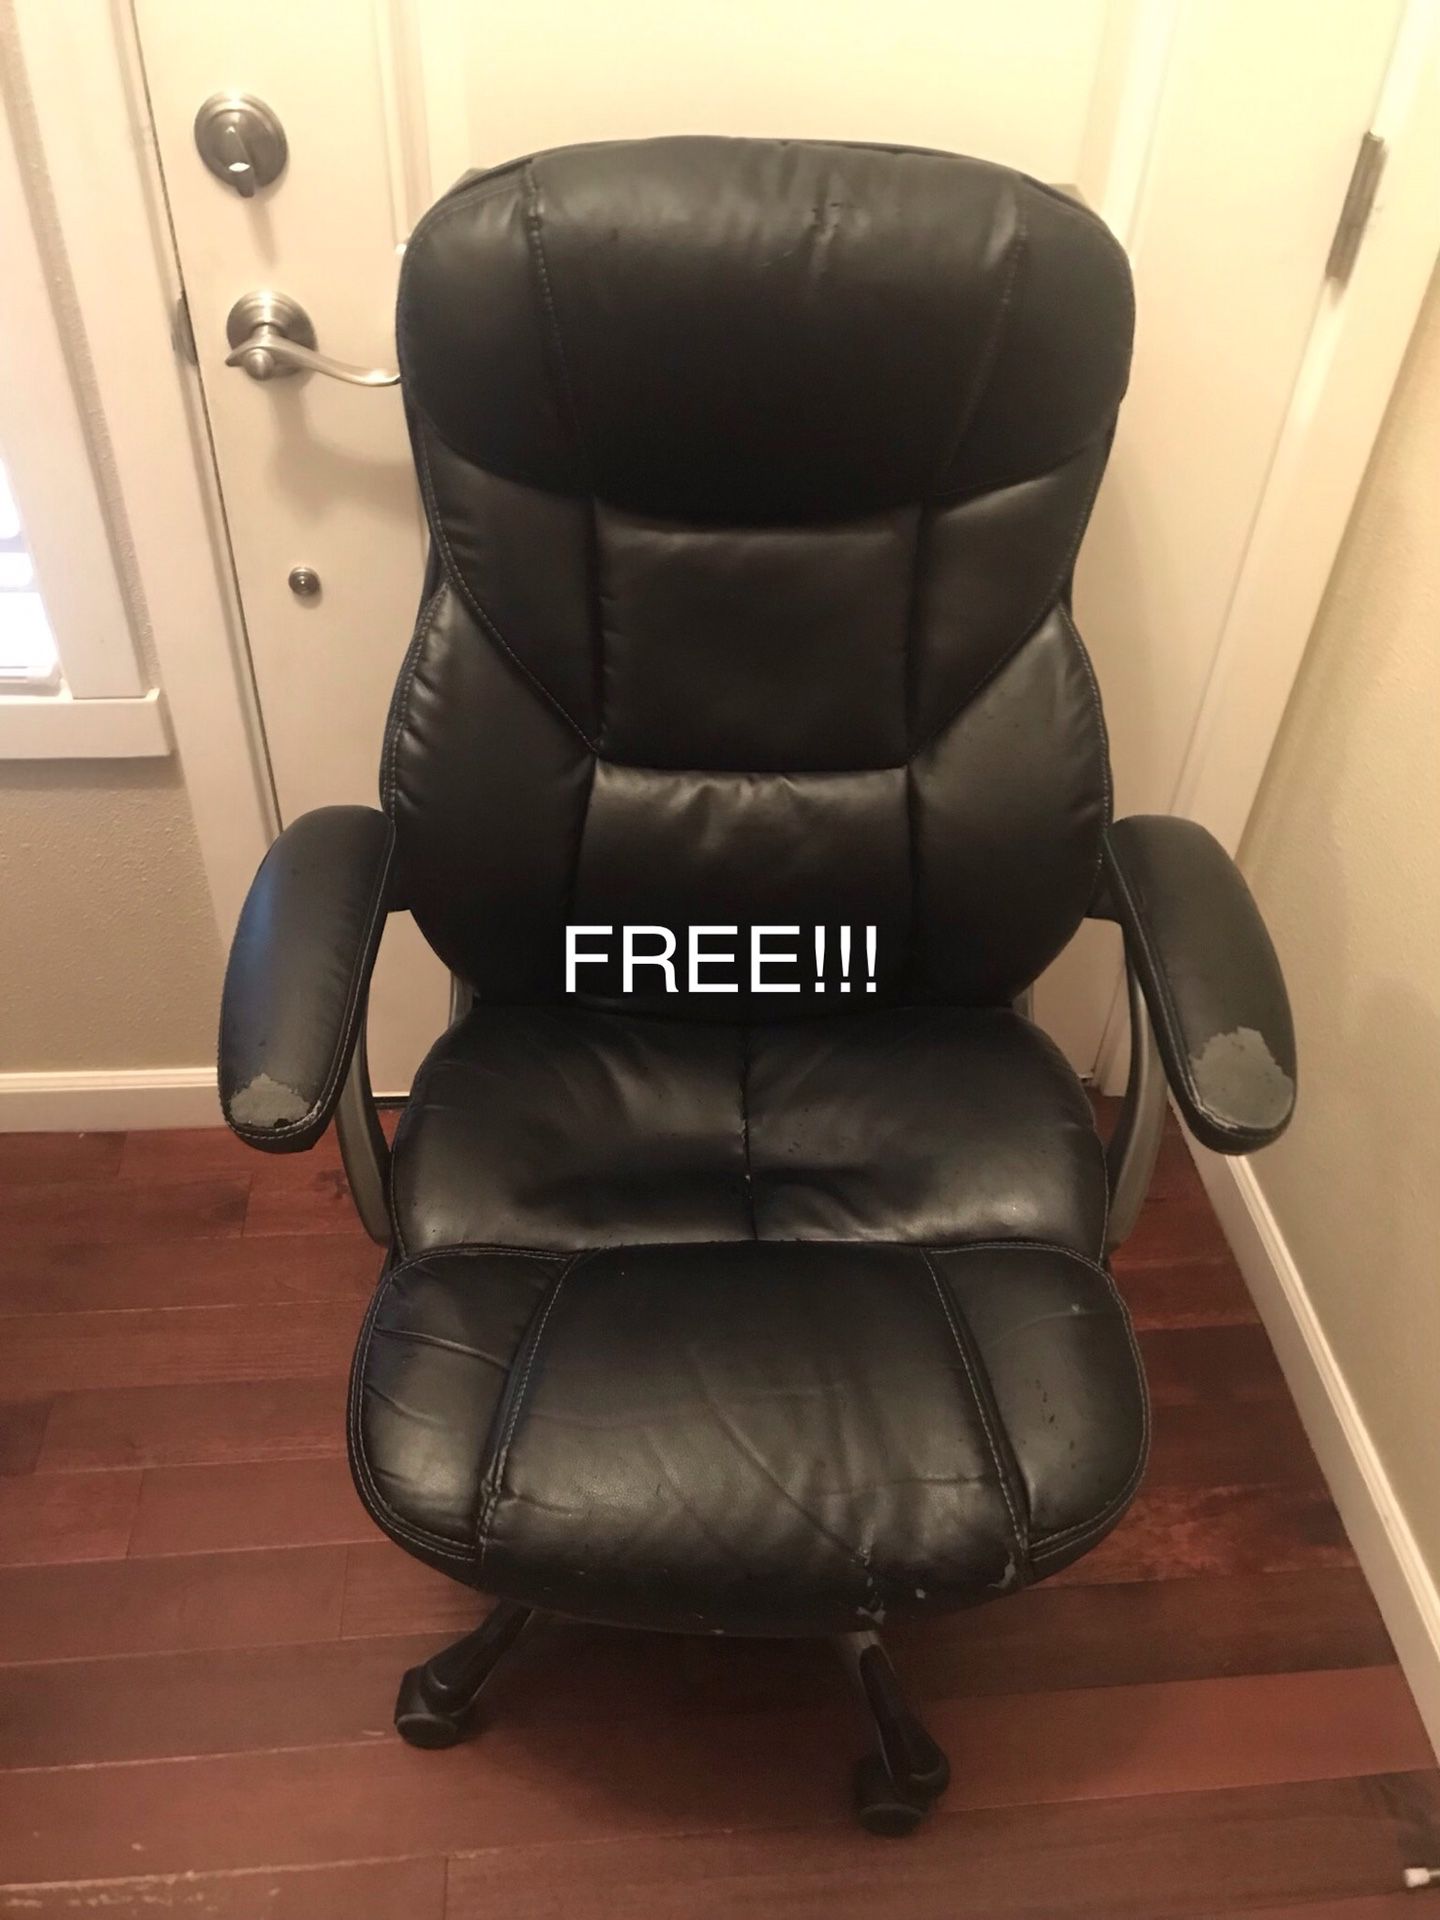 Free chair!